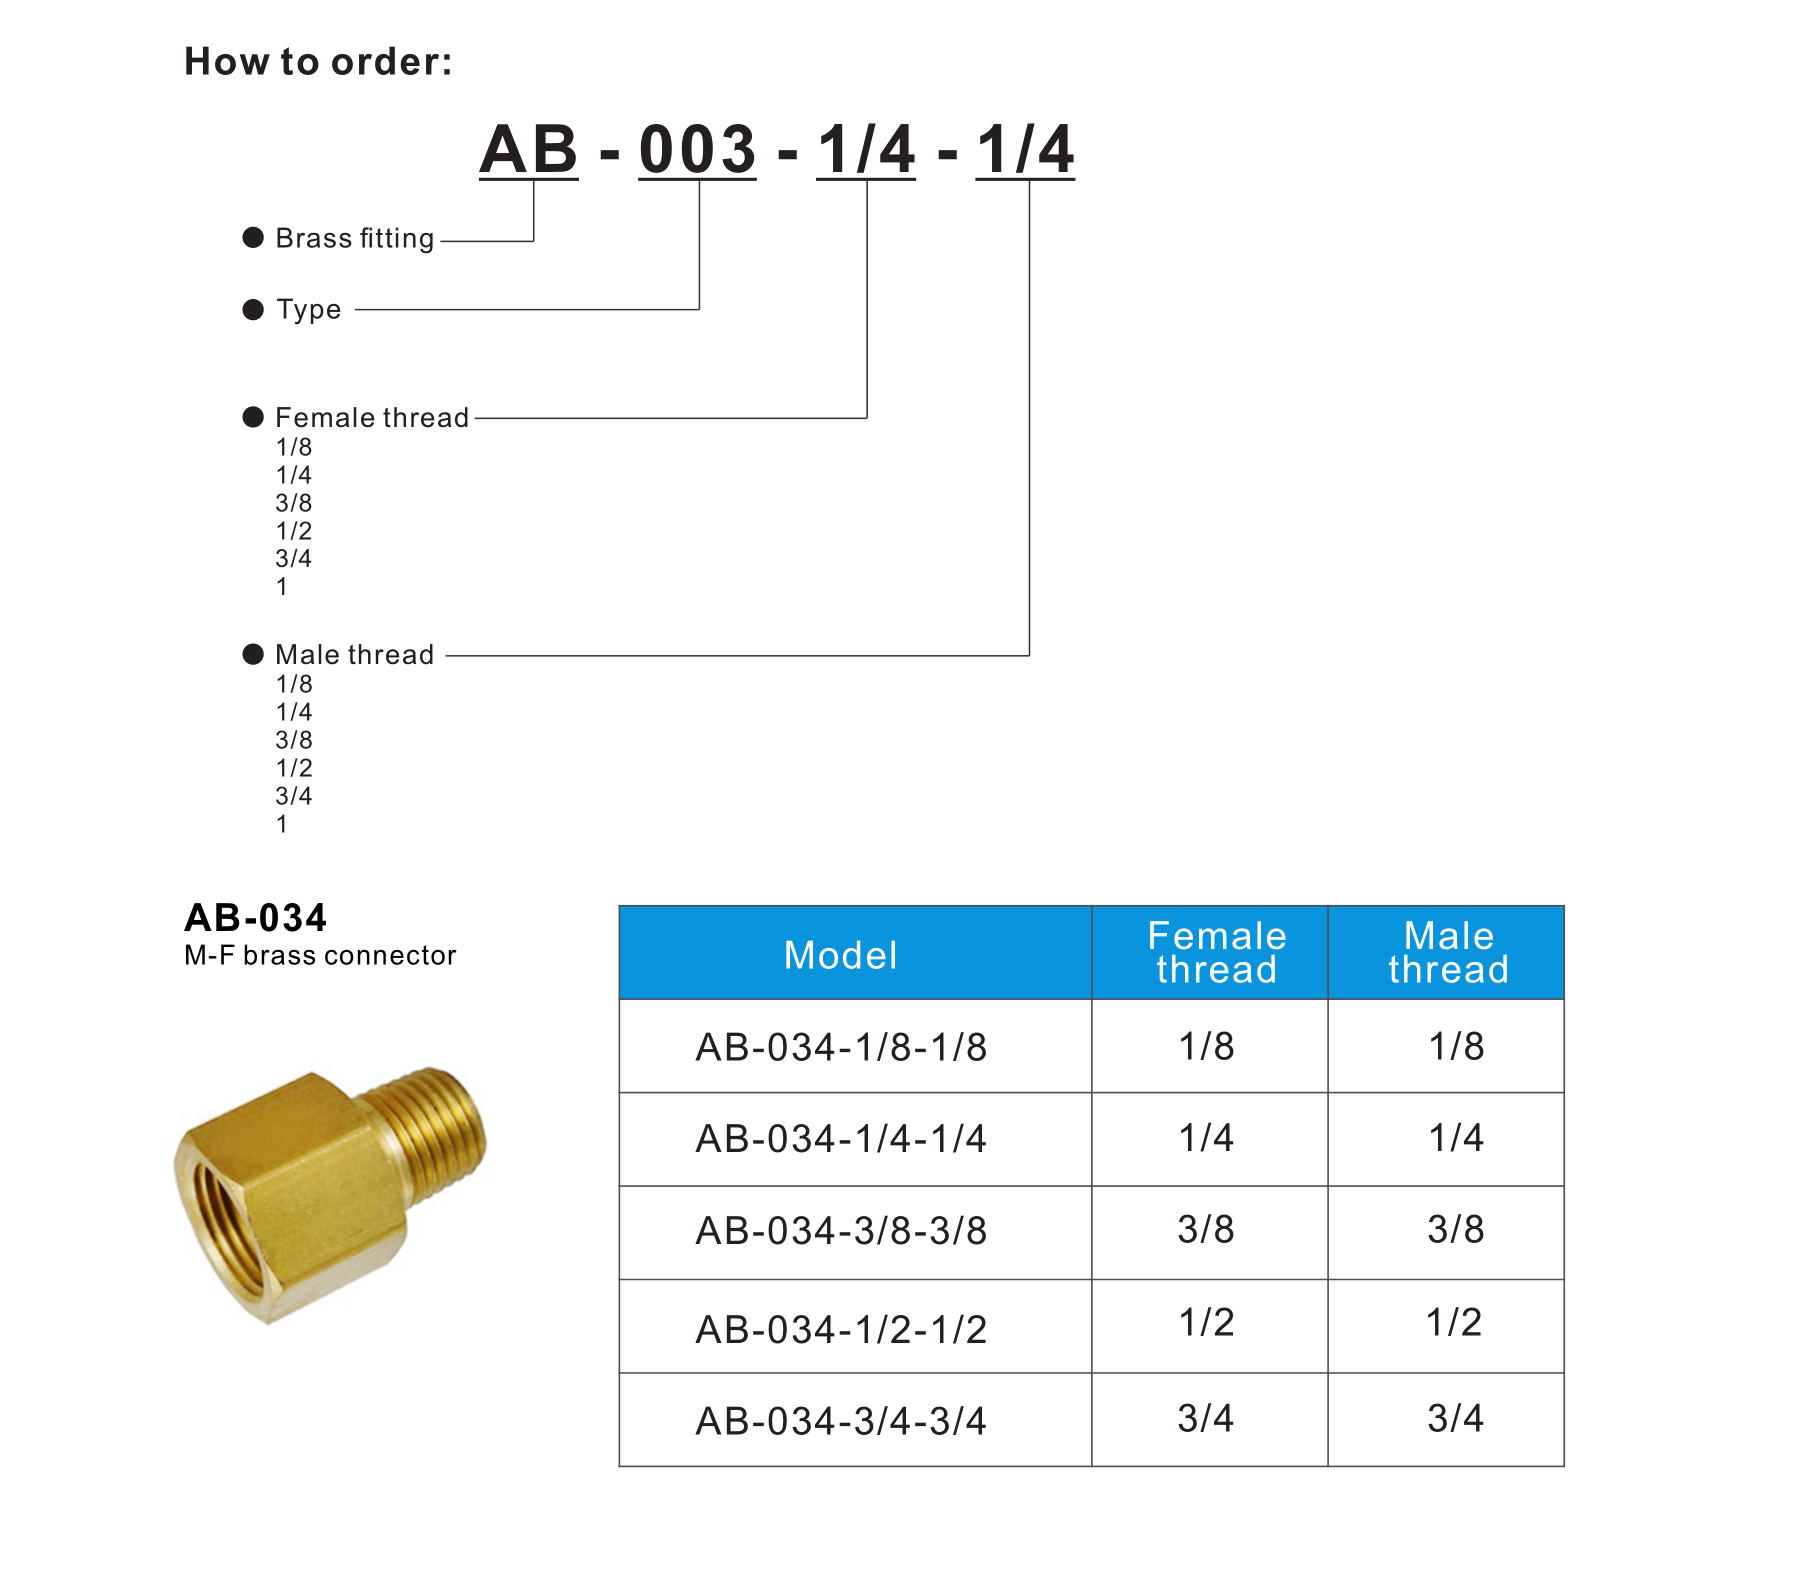 AB-034 M-F brass connector